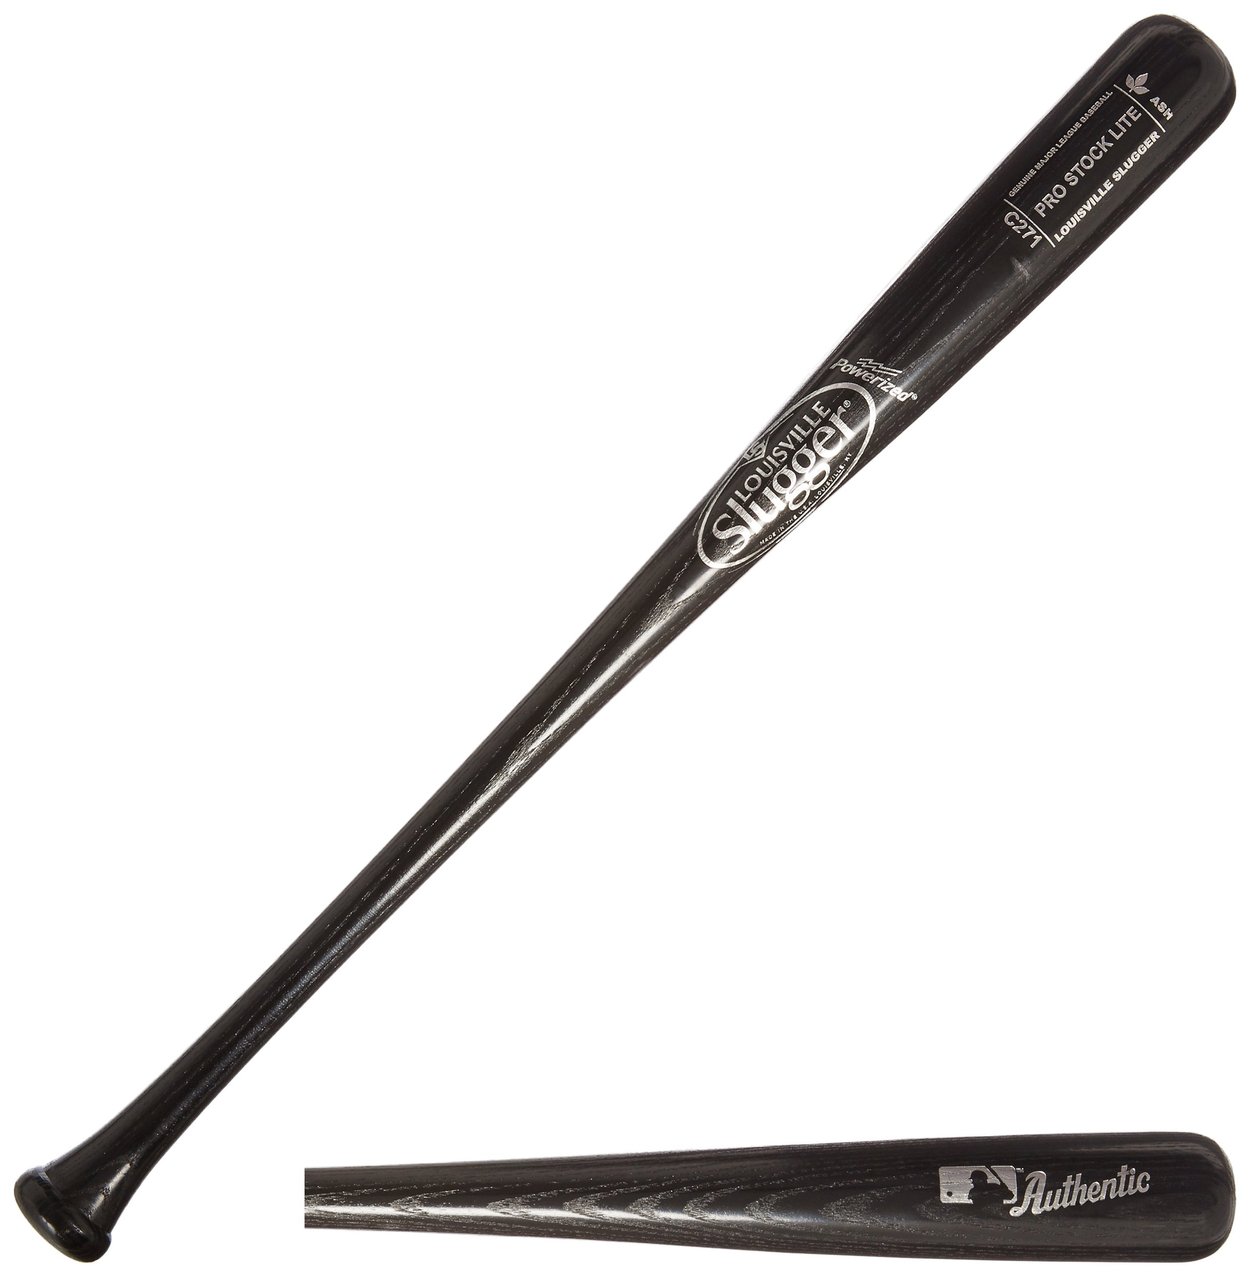 louisivlle-slugger-pro-lite-c271-black-5-wood-baseball-bat-29-inch WBPL271-BK-29 inch Louisville 044277054434 The Louisville Slugger Pro Stock Lite Wood Bat Series is made